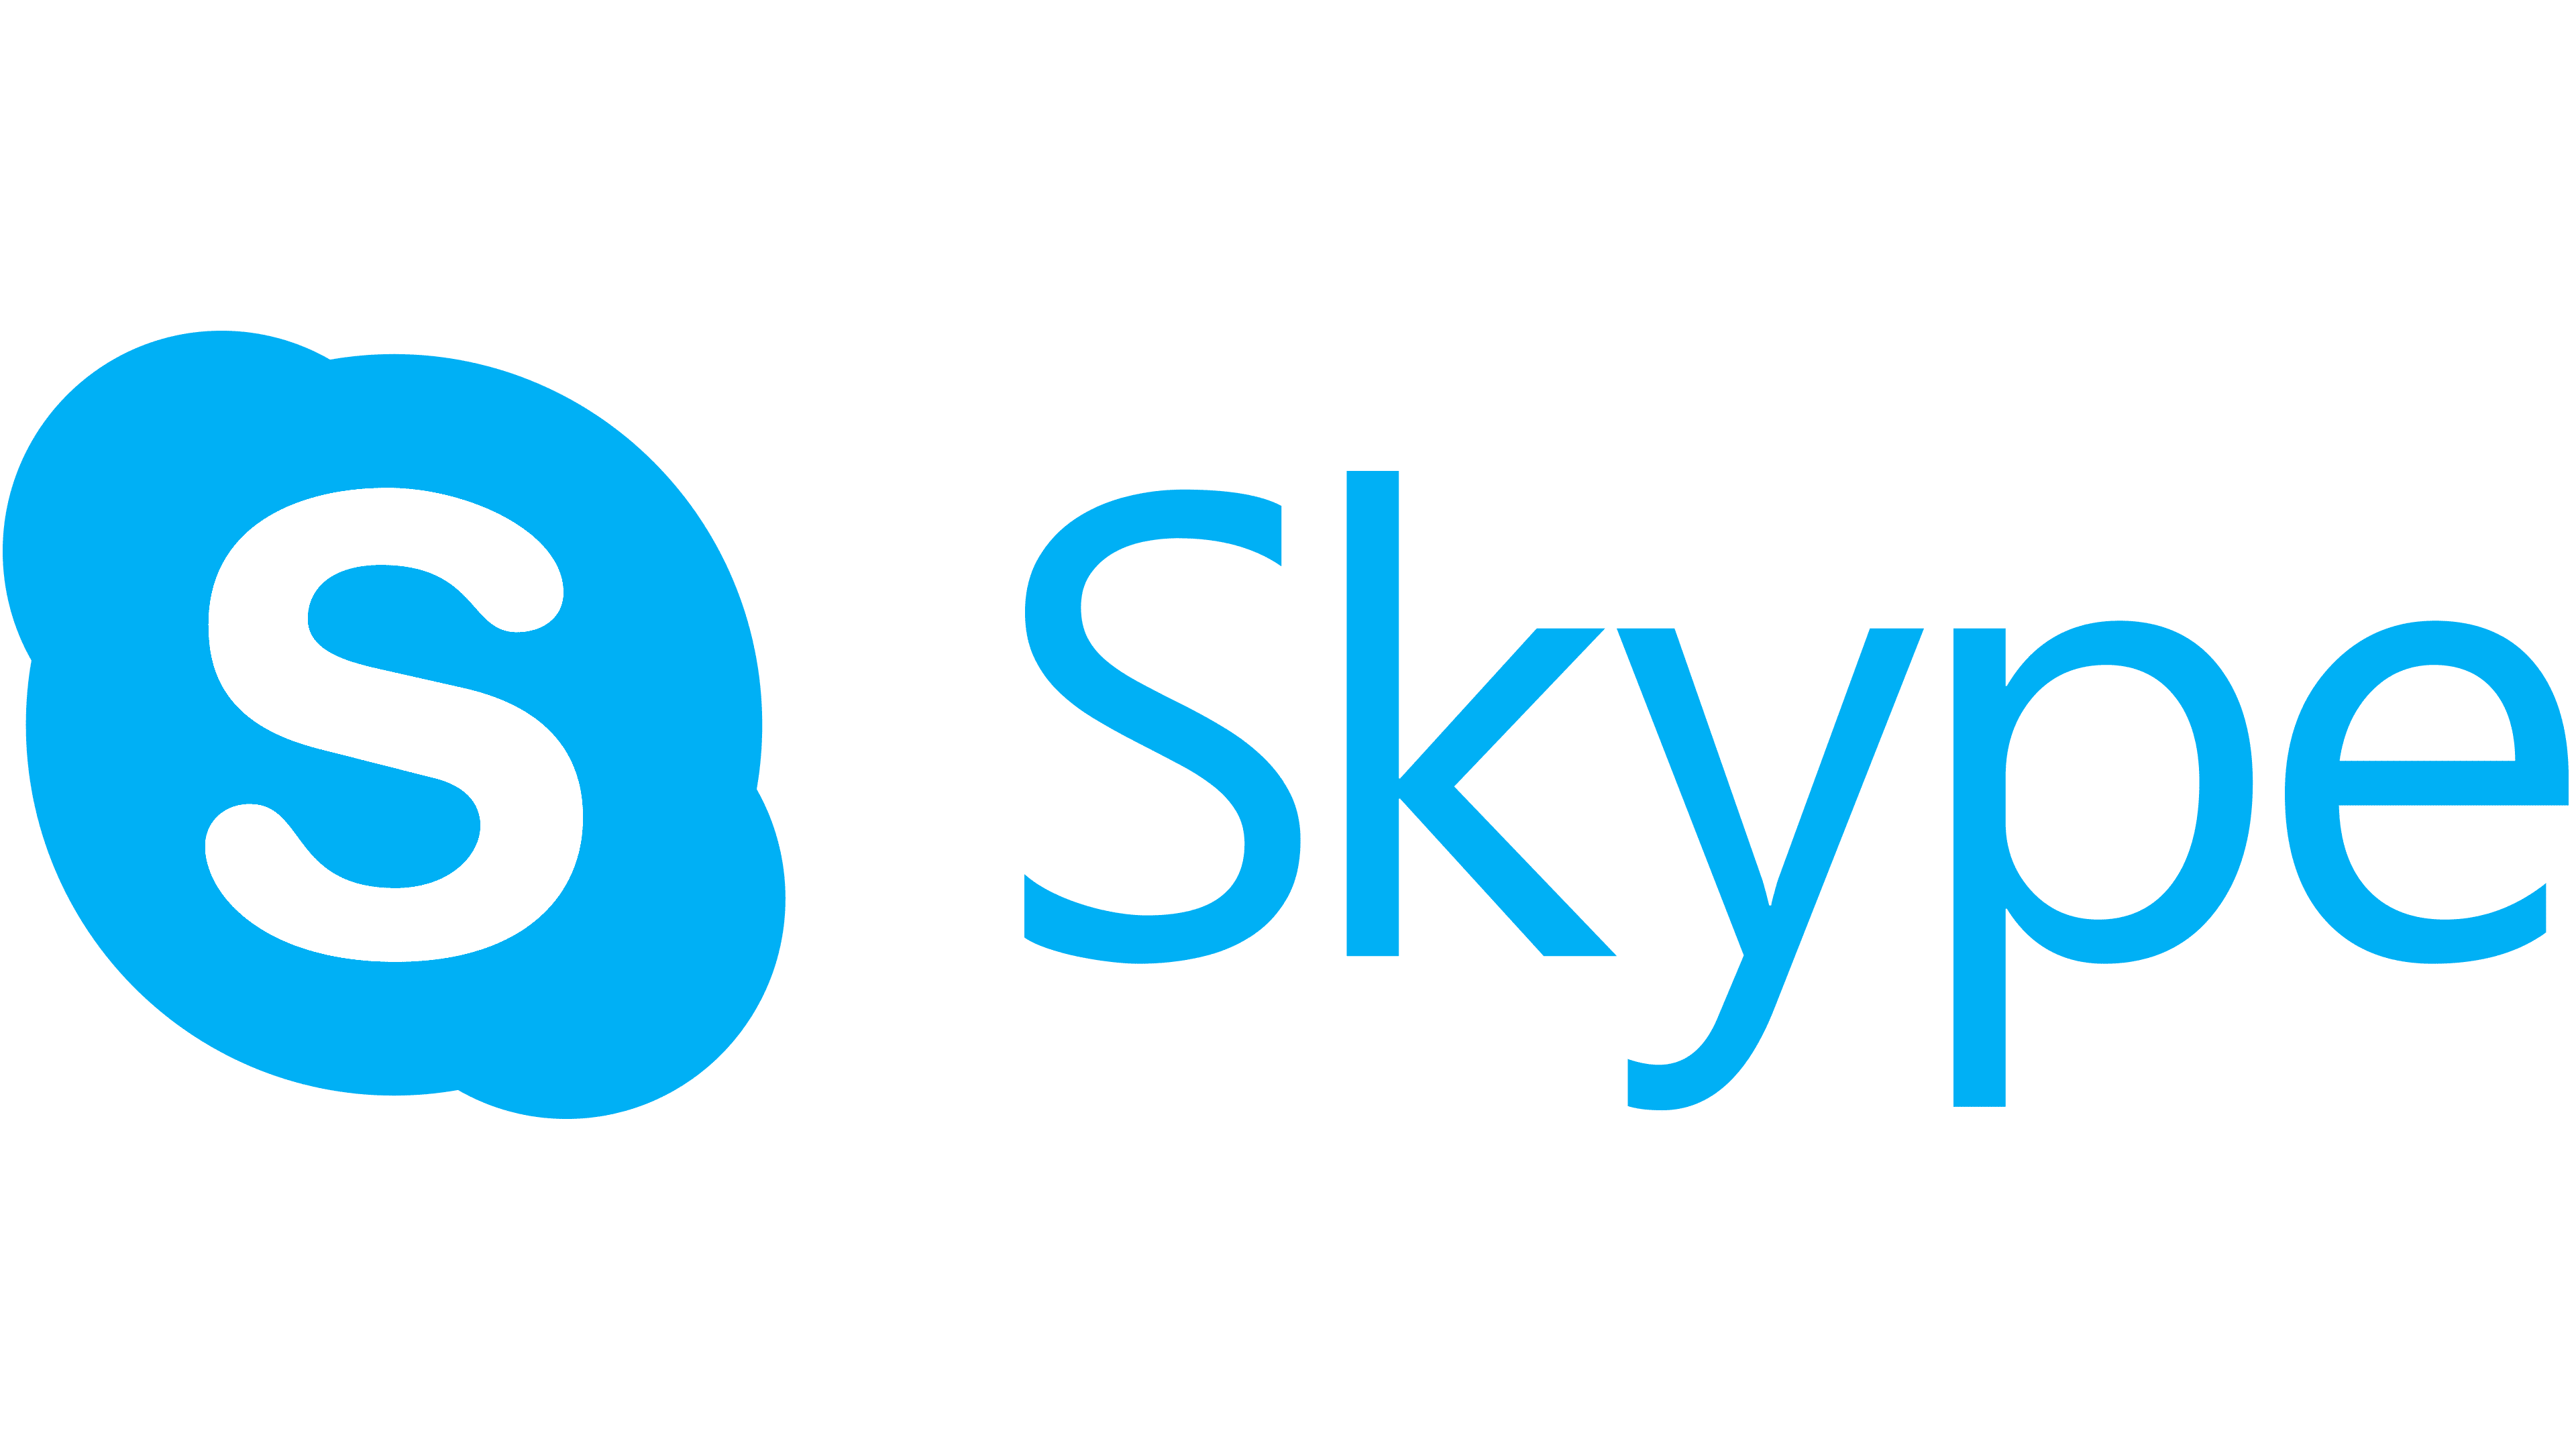 skype logo old